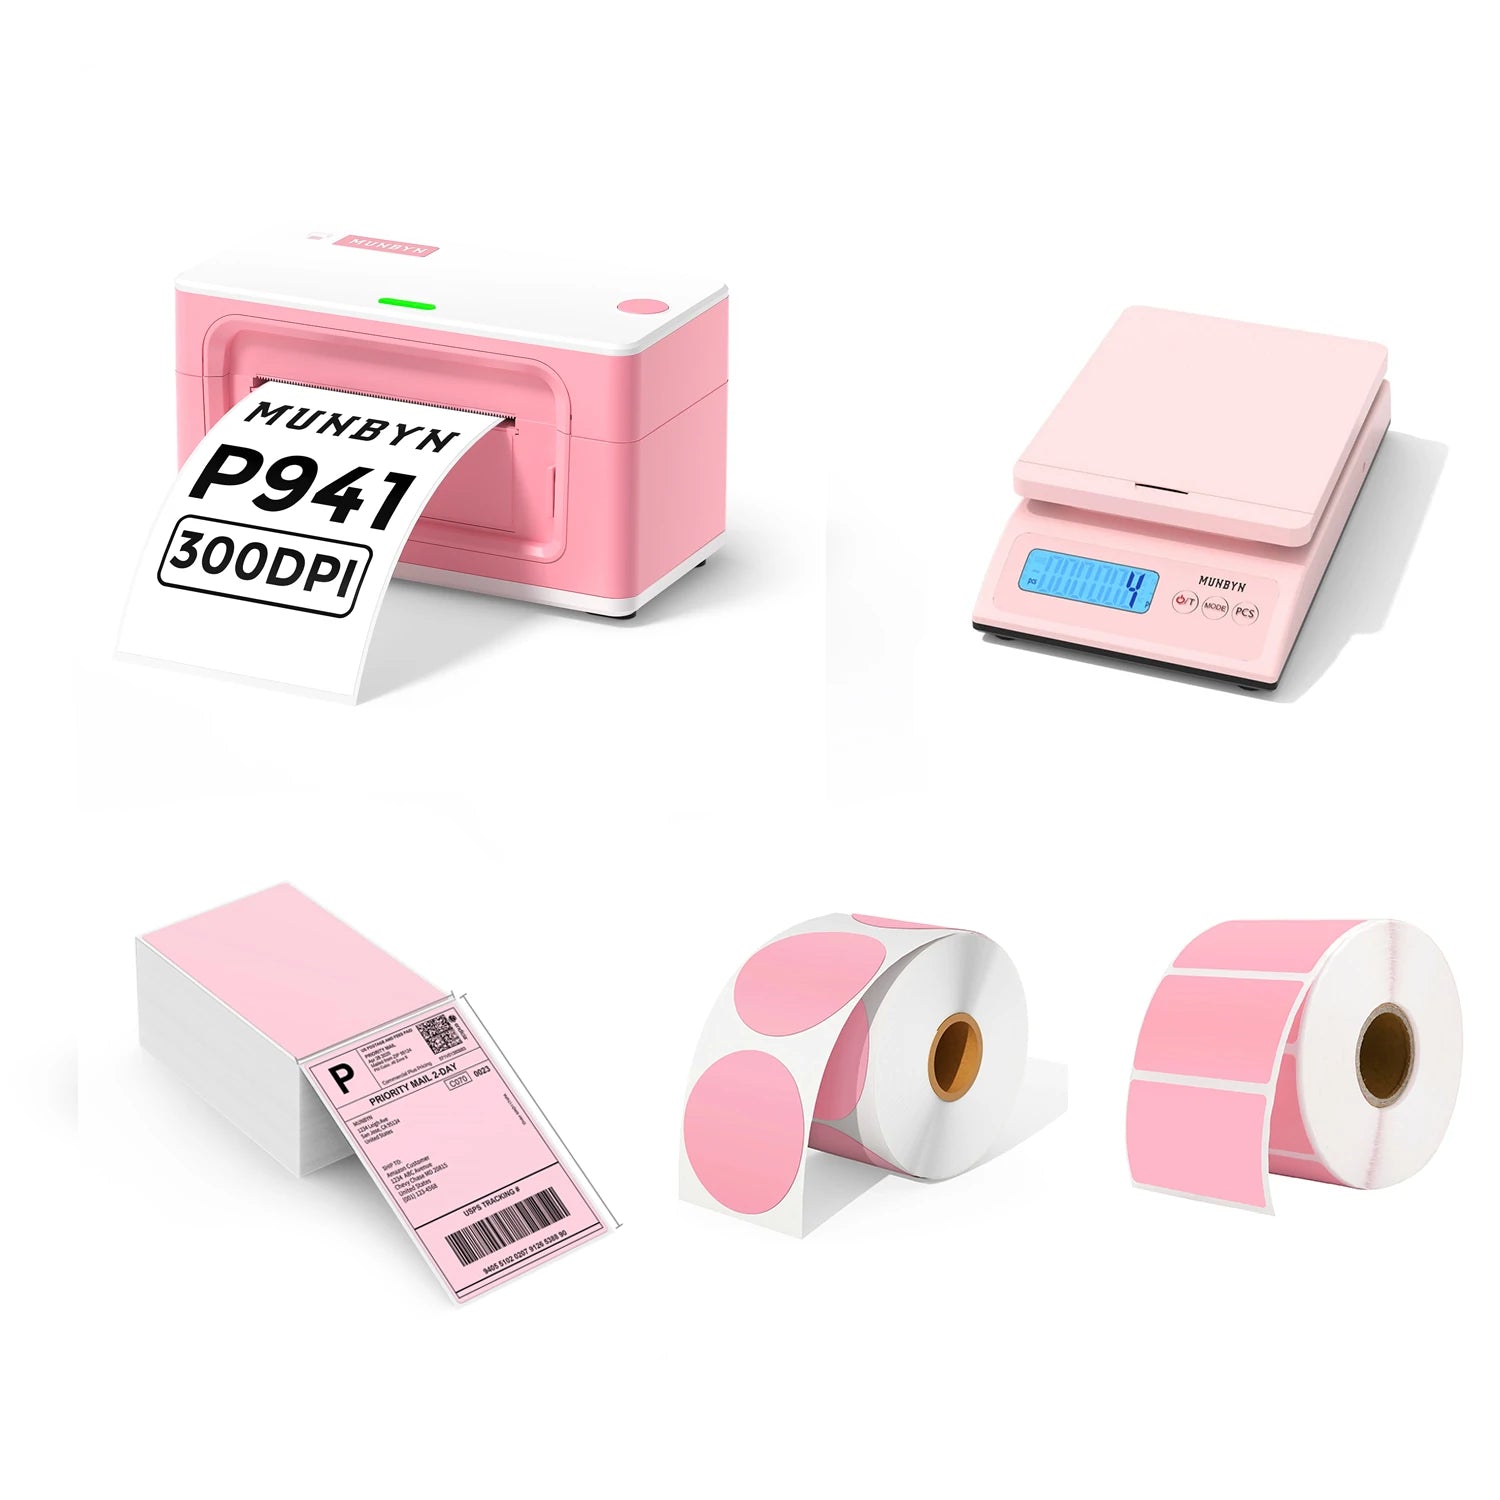 MUNBYN Thermal Label Printer, P941 [Upgraded 2.0] USB 4X6 Shipping